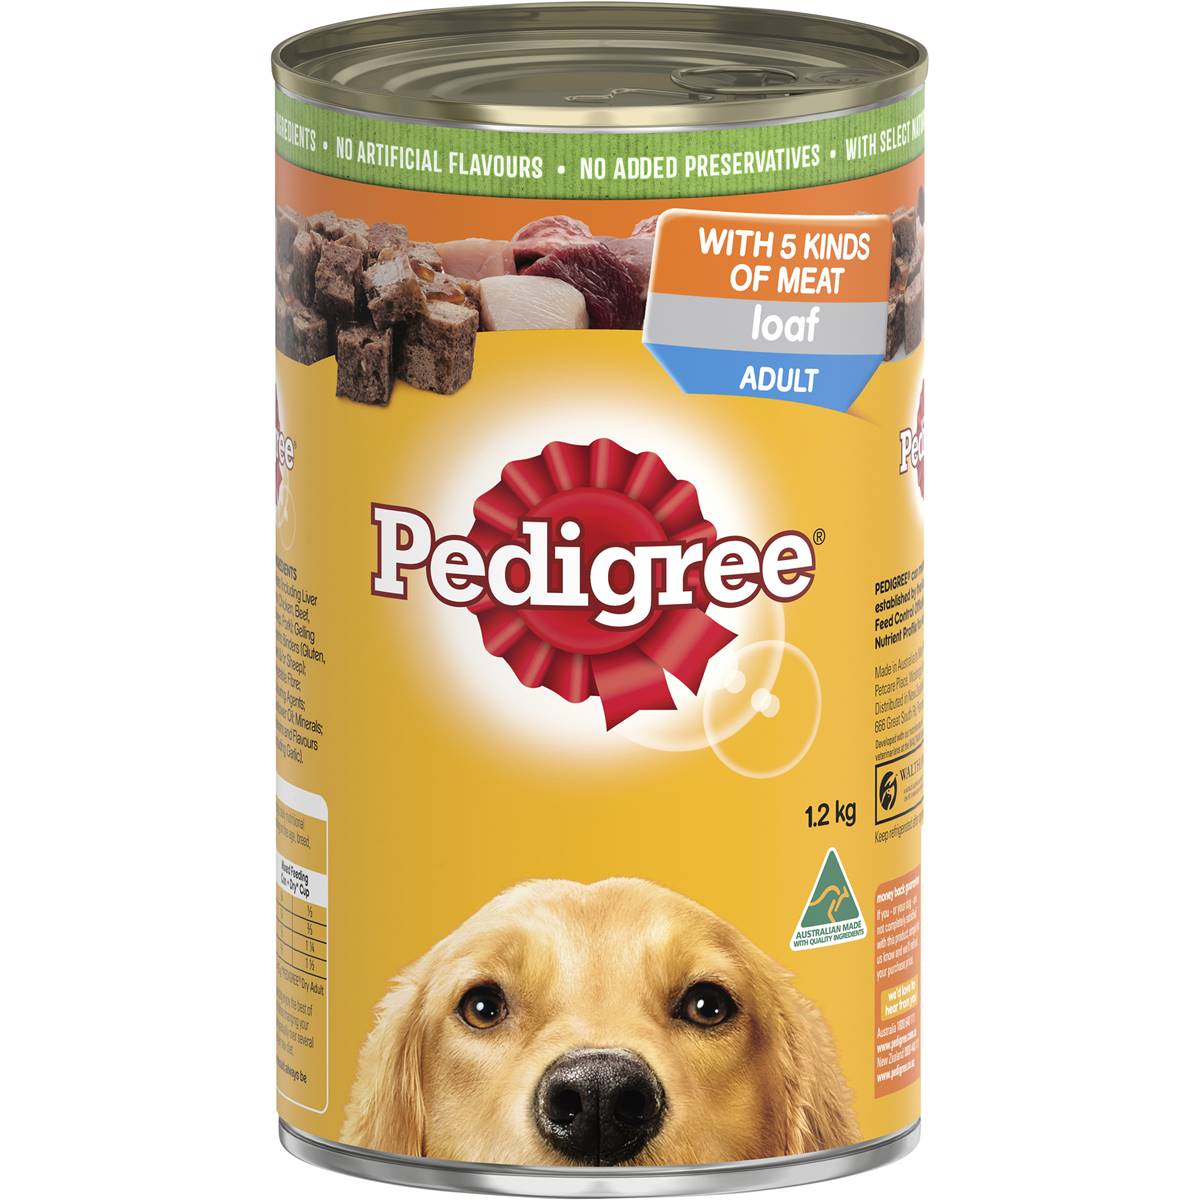 Pedigree Dog Cans 1.2kg x 12